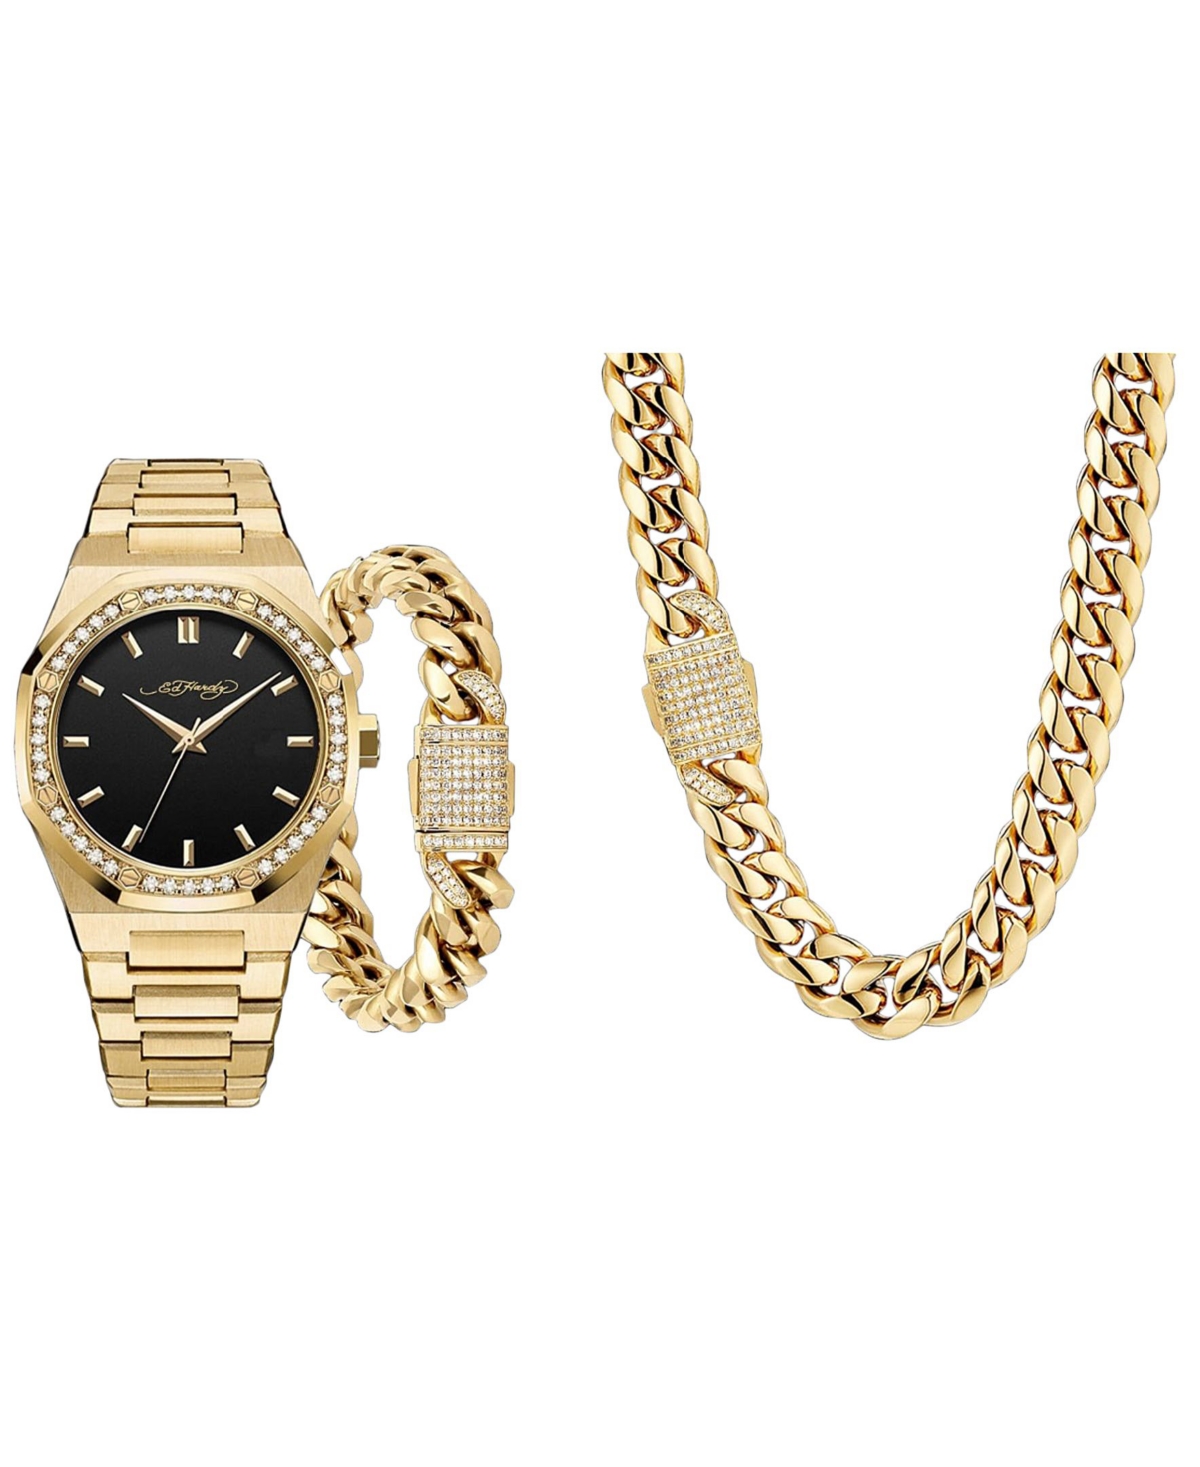 Men's Shiny Gold-Tone Metal Bracelet Watch 42mm Gift Set - Matte Black, Shiny Gold-Tone